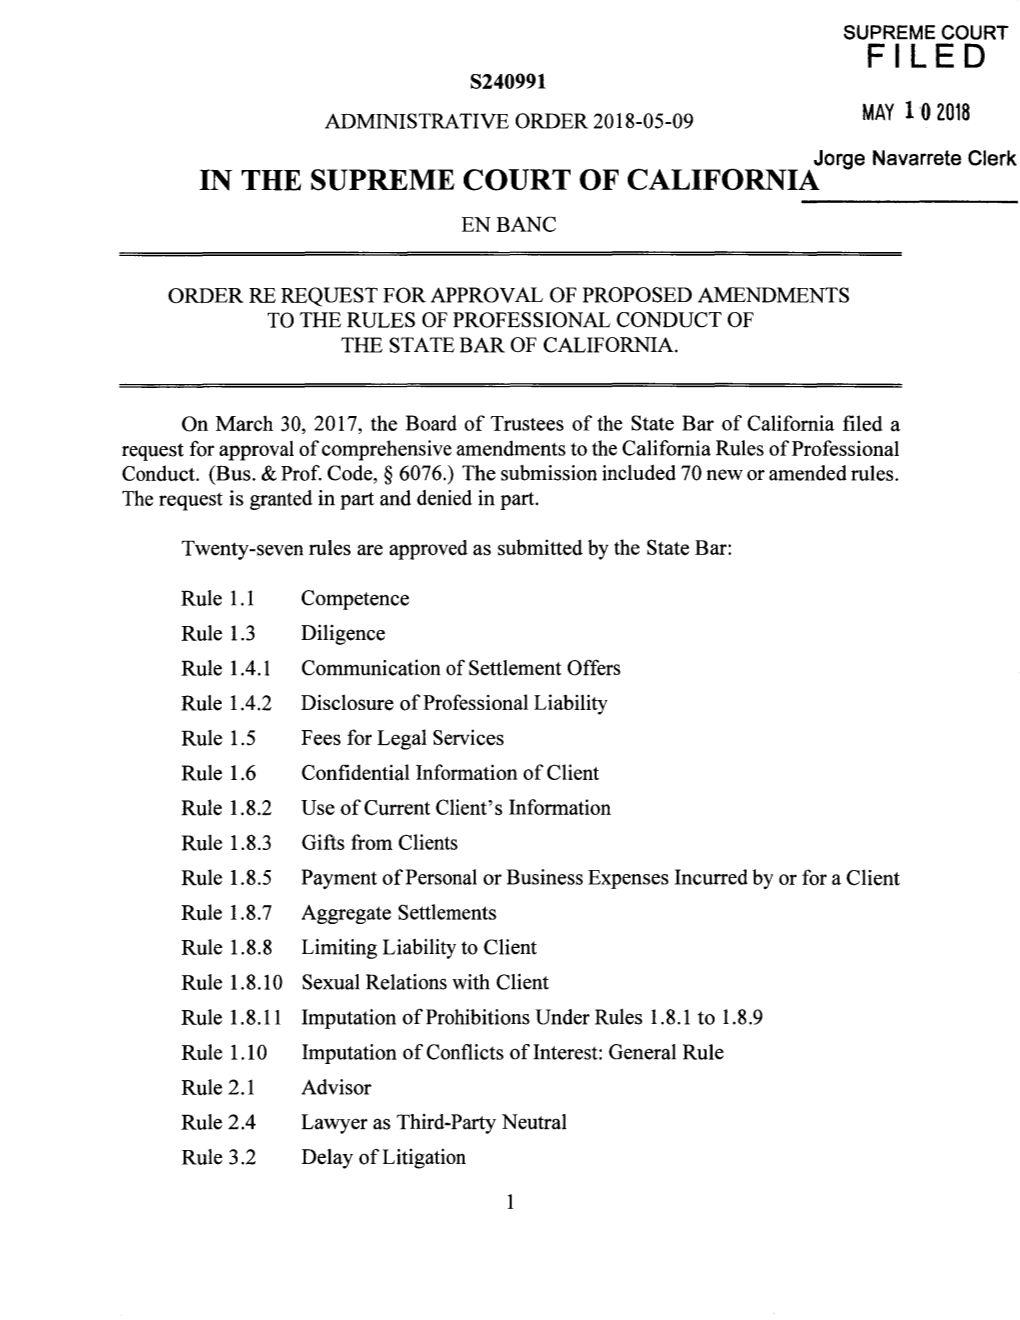 ADMINISTRATIVE ORDER 2018-05-09 MAY 1 0 2018 Jorge Navarrete Clerk in the SUPREME COURT of CALIFORNIA ENBANC